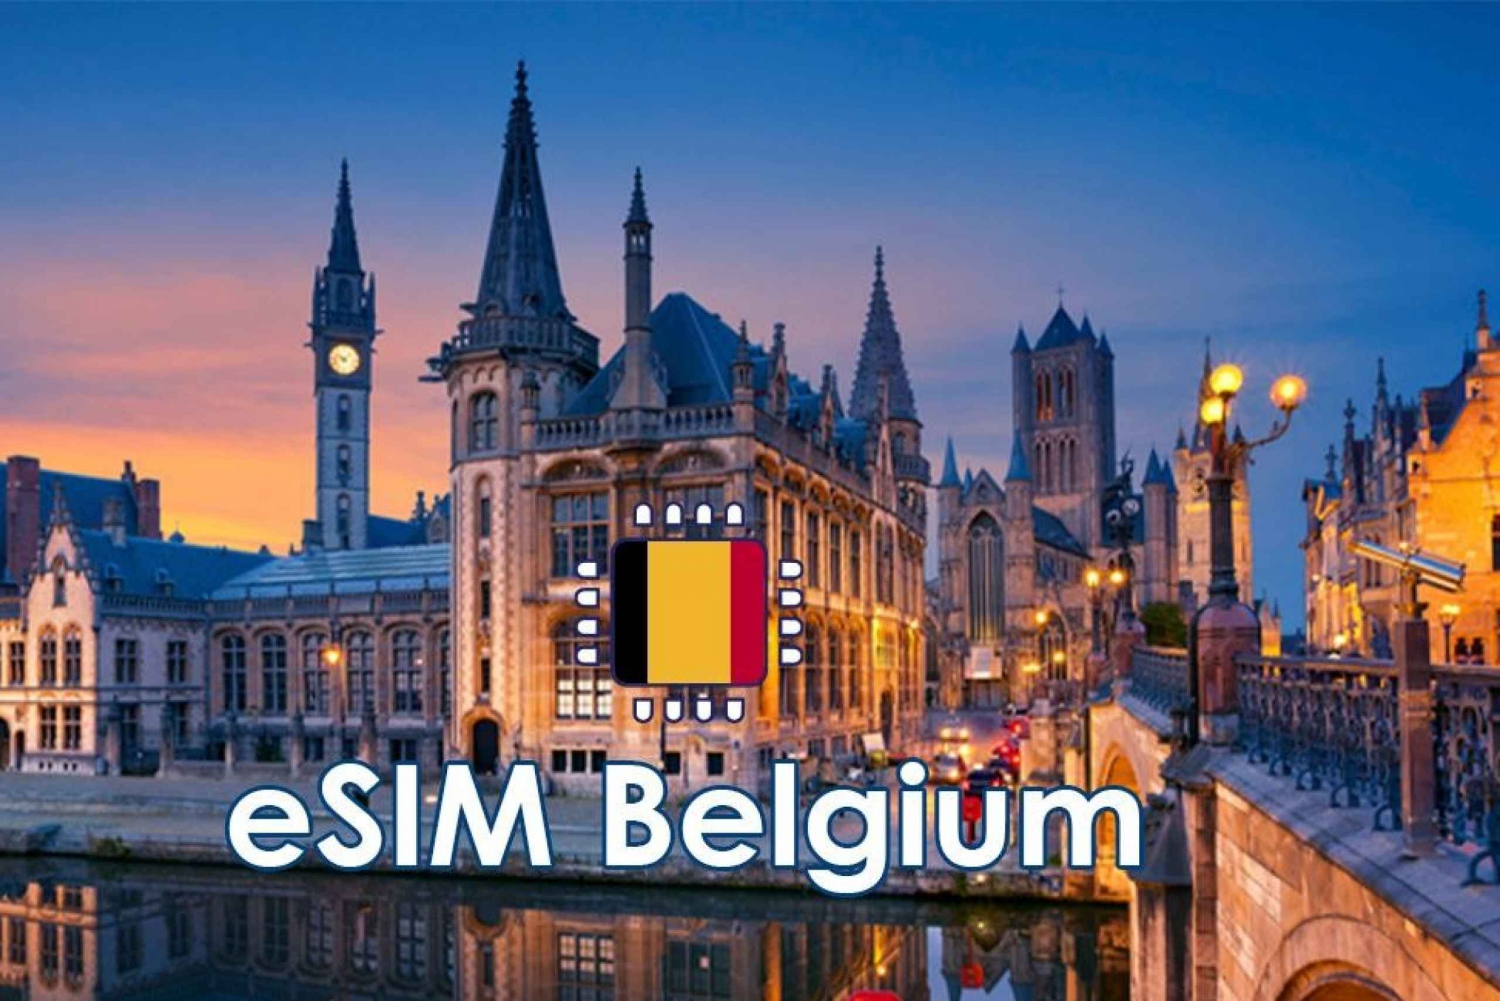 België: eSIM Mobiel Data Plan - 10GB